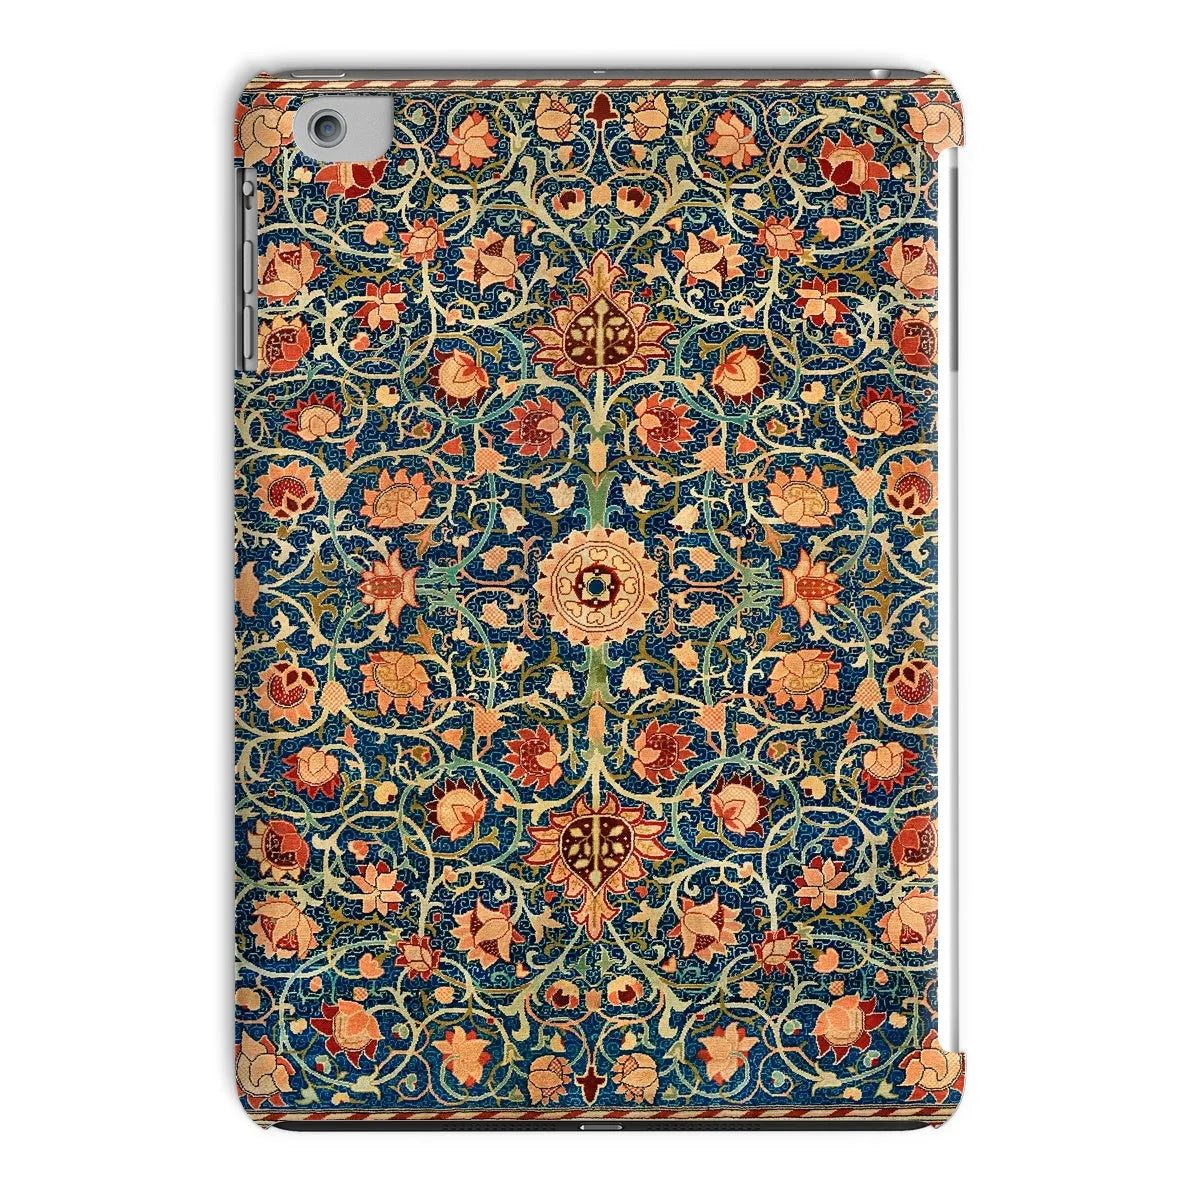 Holland Park Carpet By William Morris Aesthetic Ipad Case - Slim Designer Back Cover - Ipad Mini 1/2/3 - Gloss - Tablet